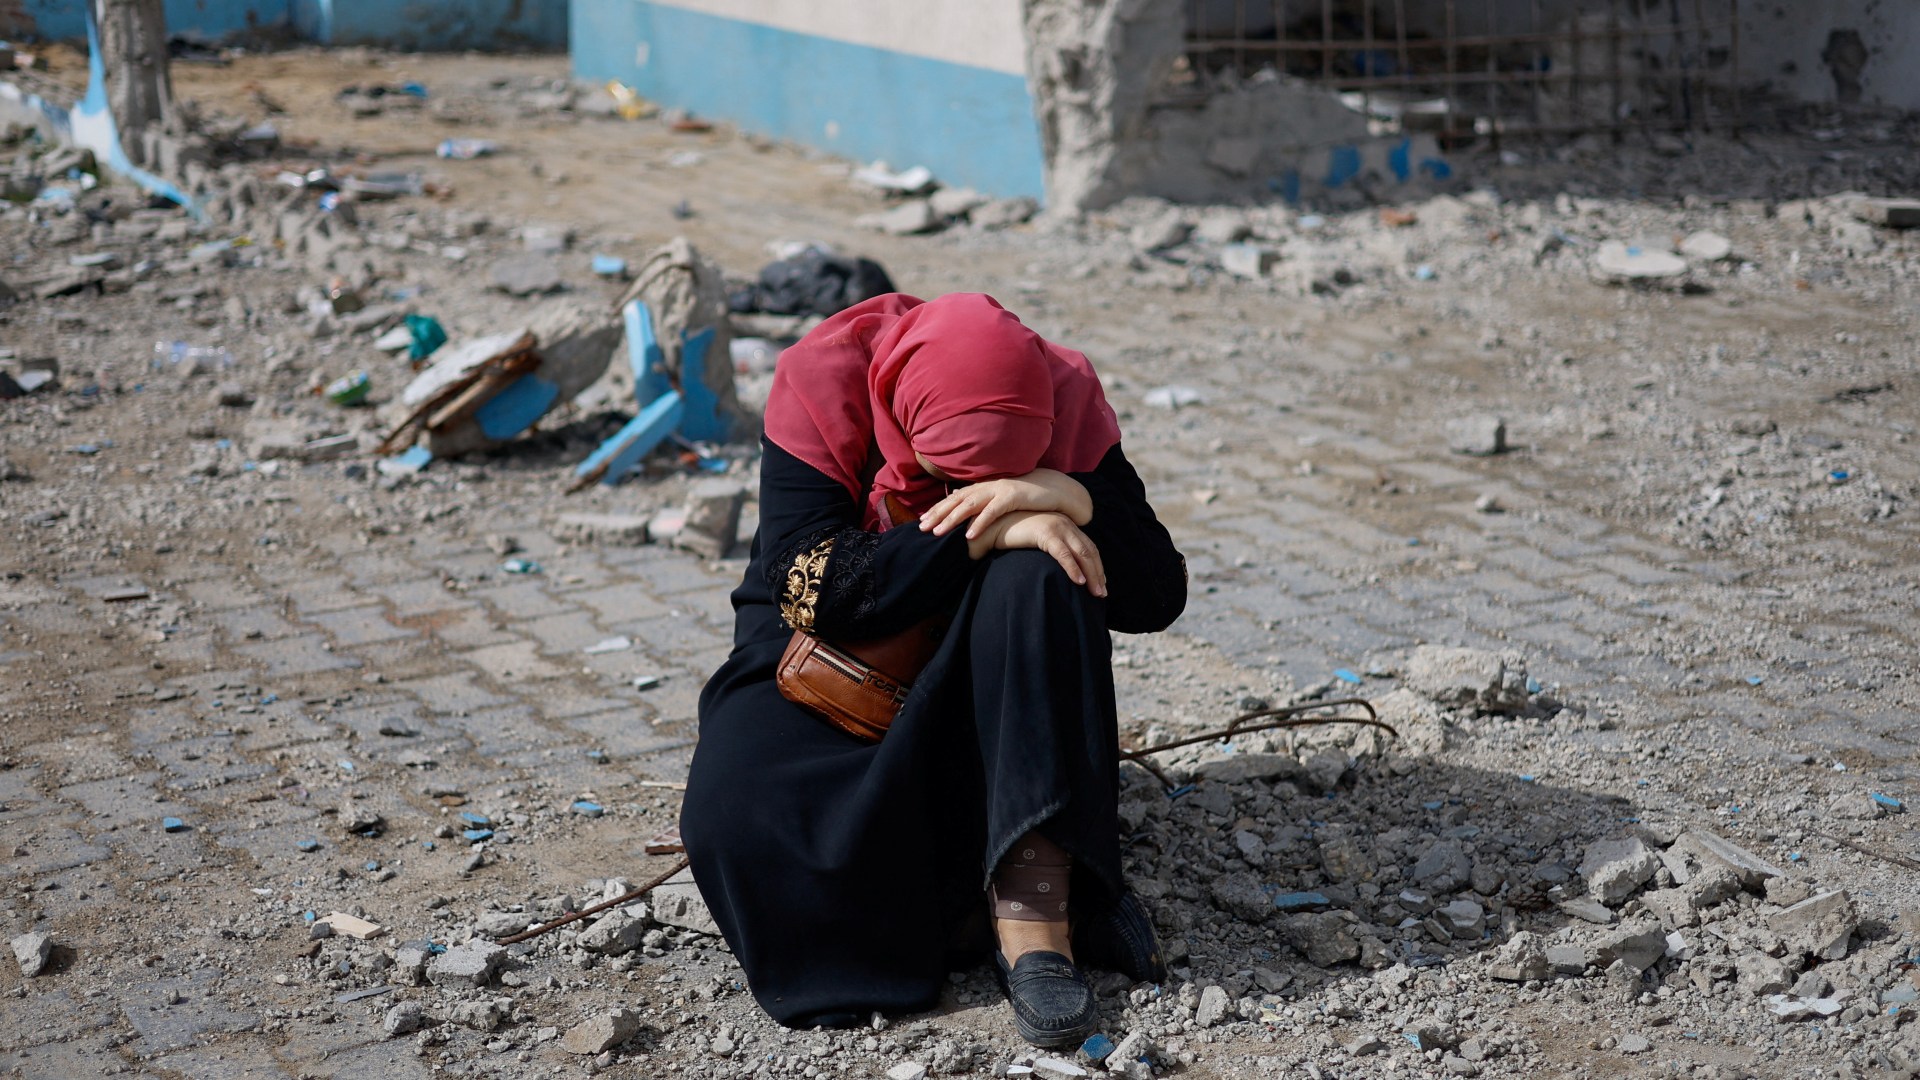 UN experts warn of Israeli violations against Palestinian women